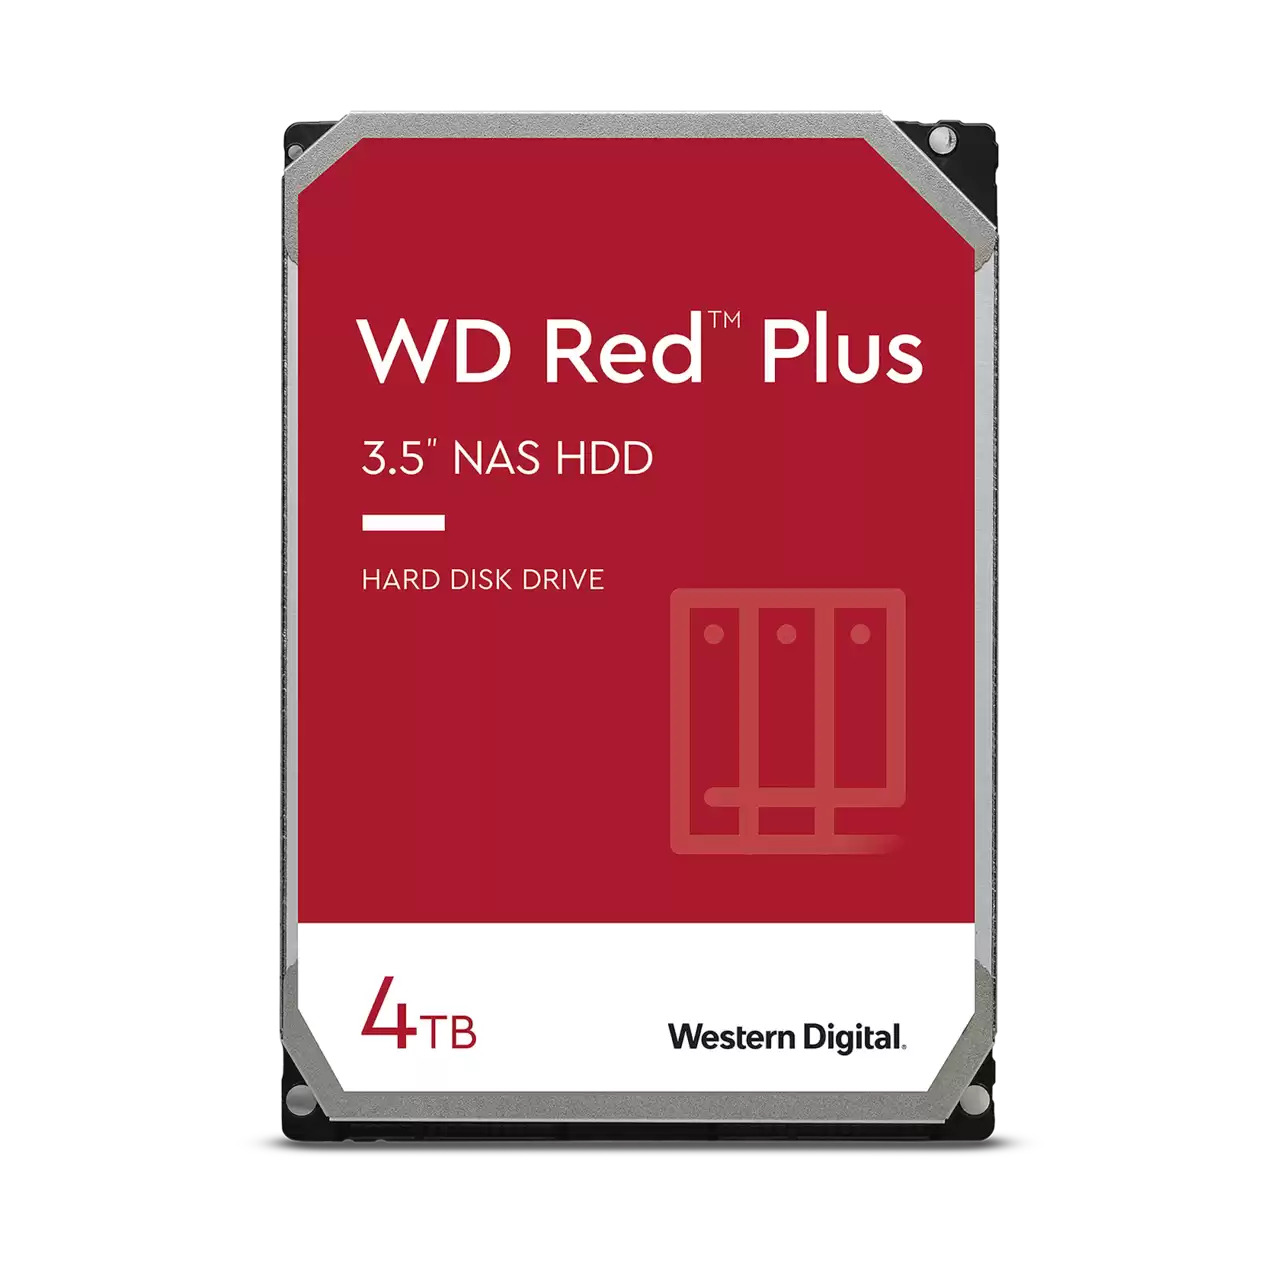 Western Digital RED Plus NAS Drive 4 TB. 3.5 inch, SATA, 5400 RPM, 128 MB Cache